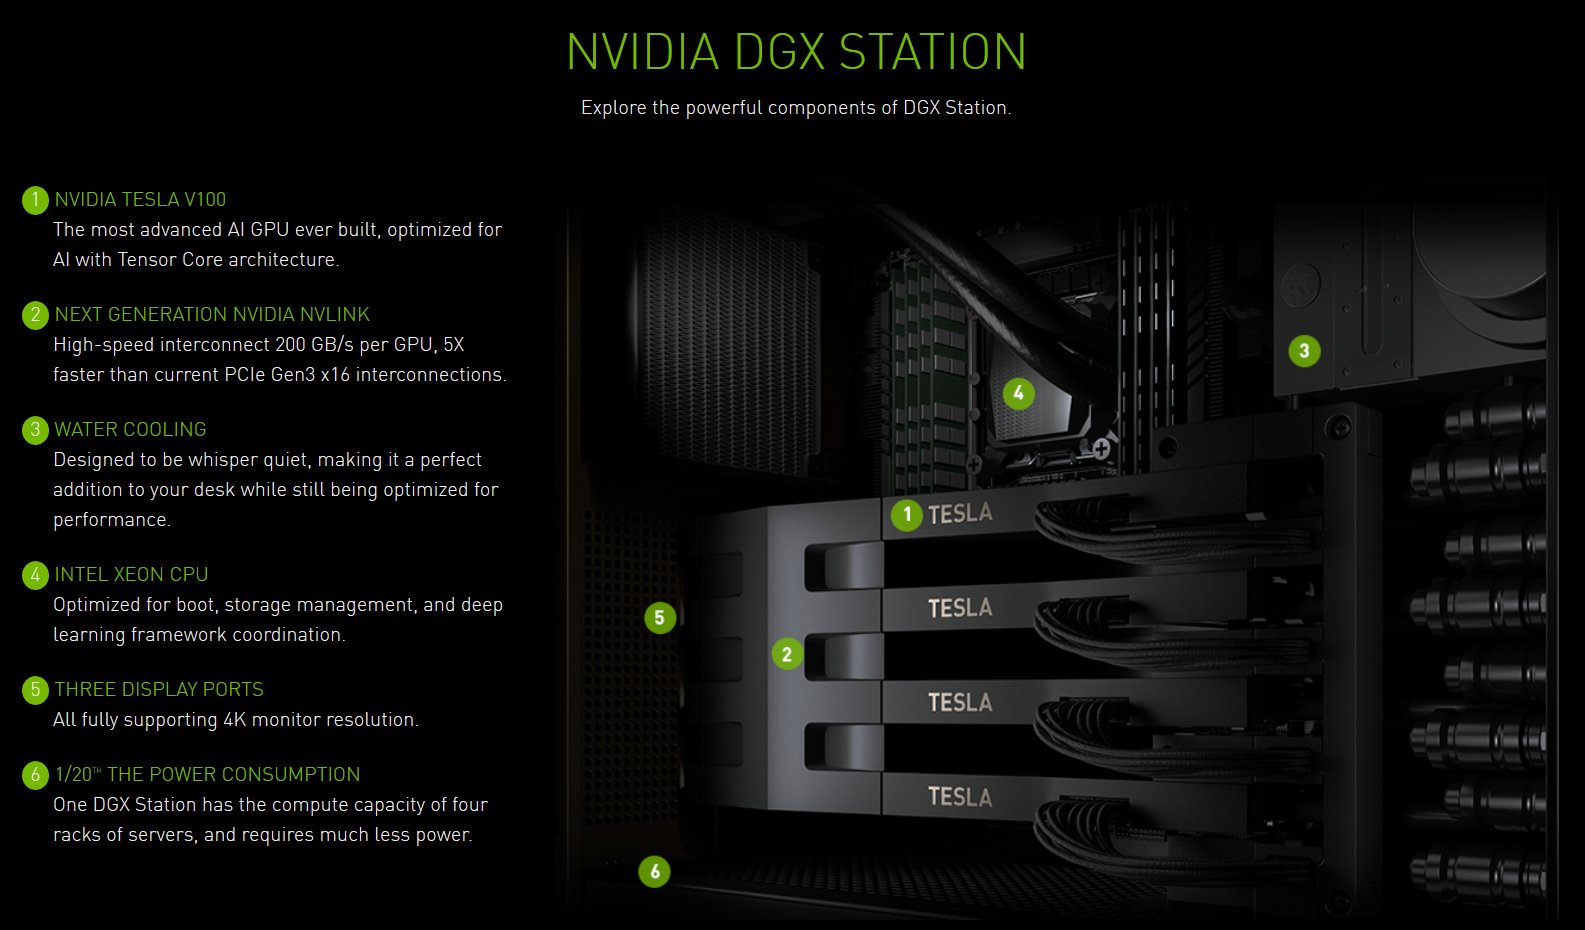 Nvidia DGX Station